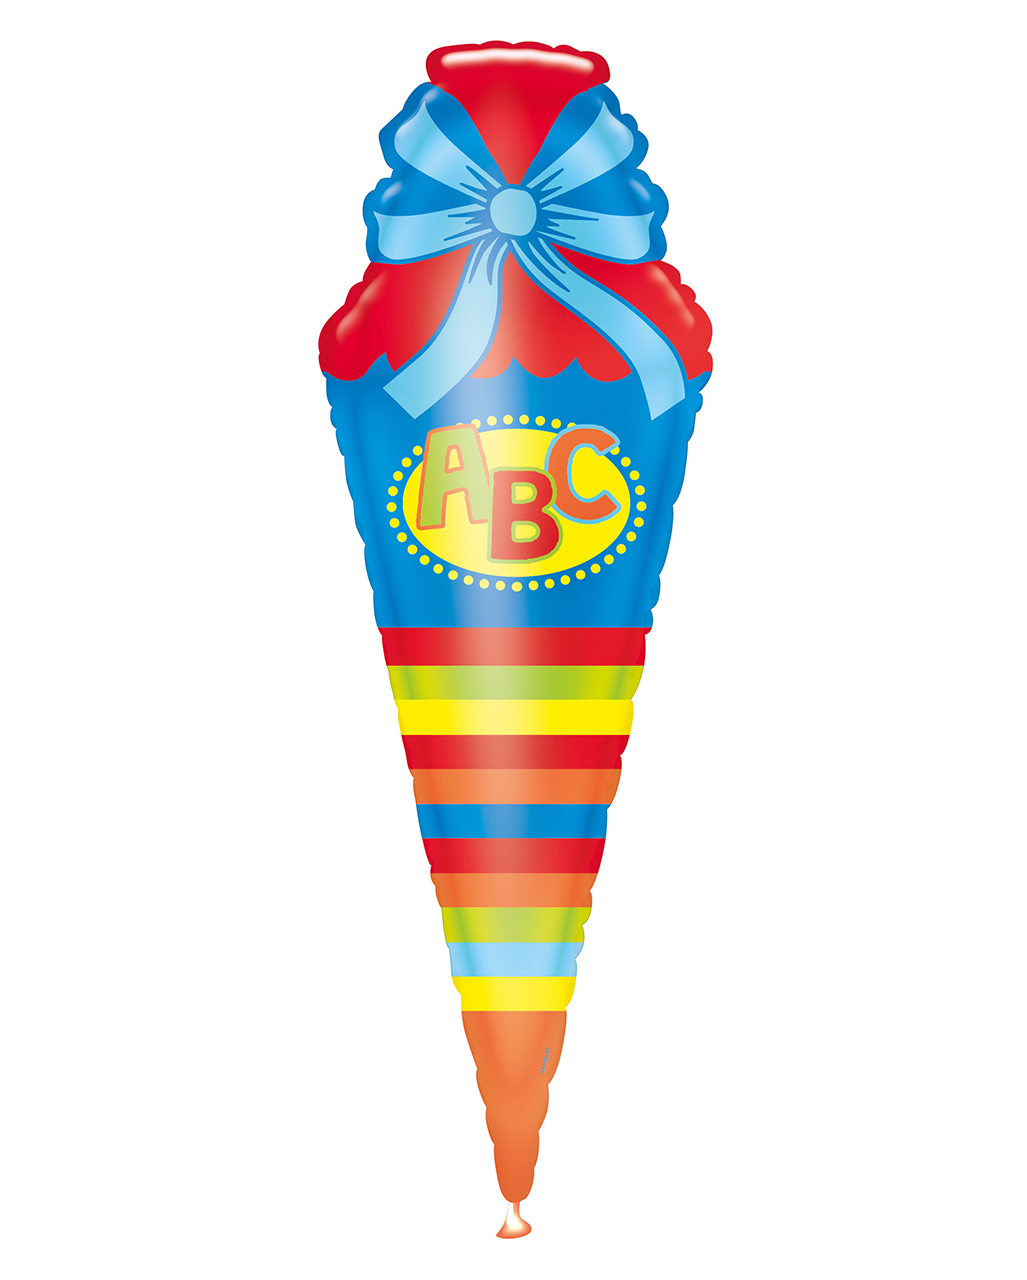 ABC Schultüte Folienballon 111cm  Geschenkidee von Horror-Shop.com